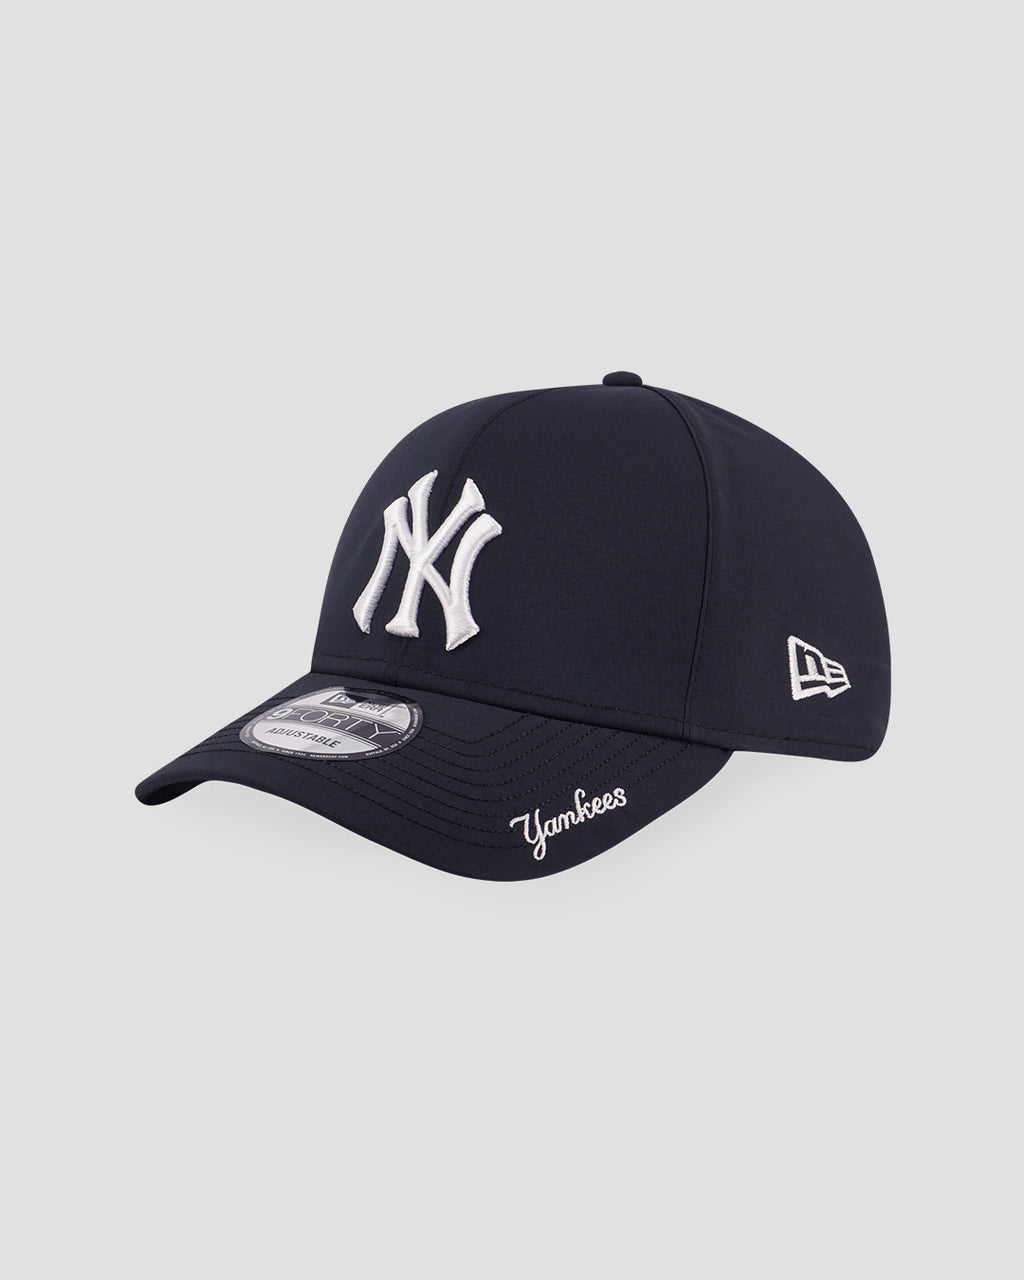 New Era MLB GORE-TEX New York Yankees 9FORTY Cap - Black